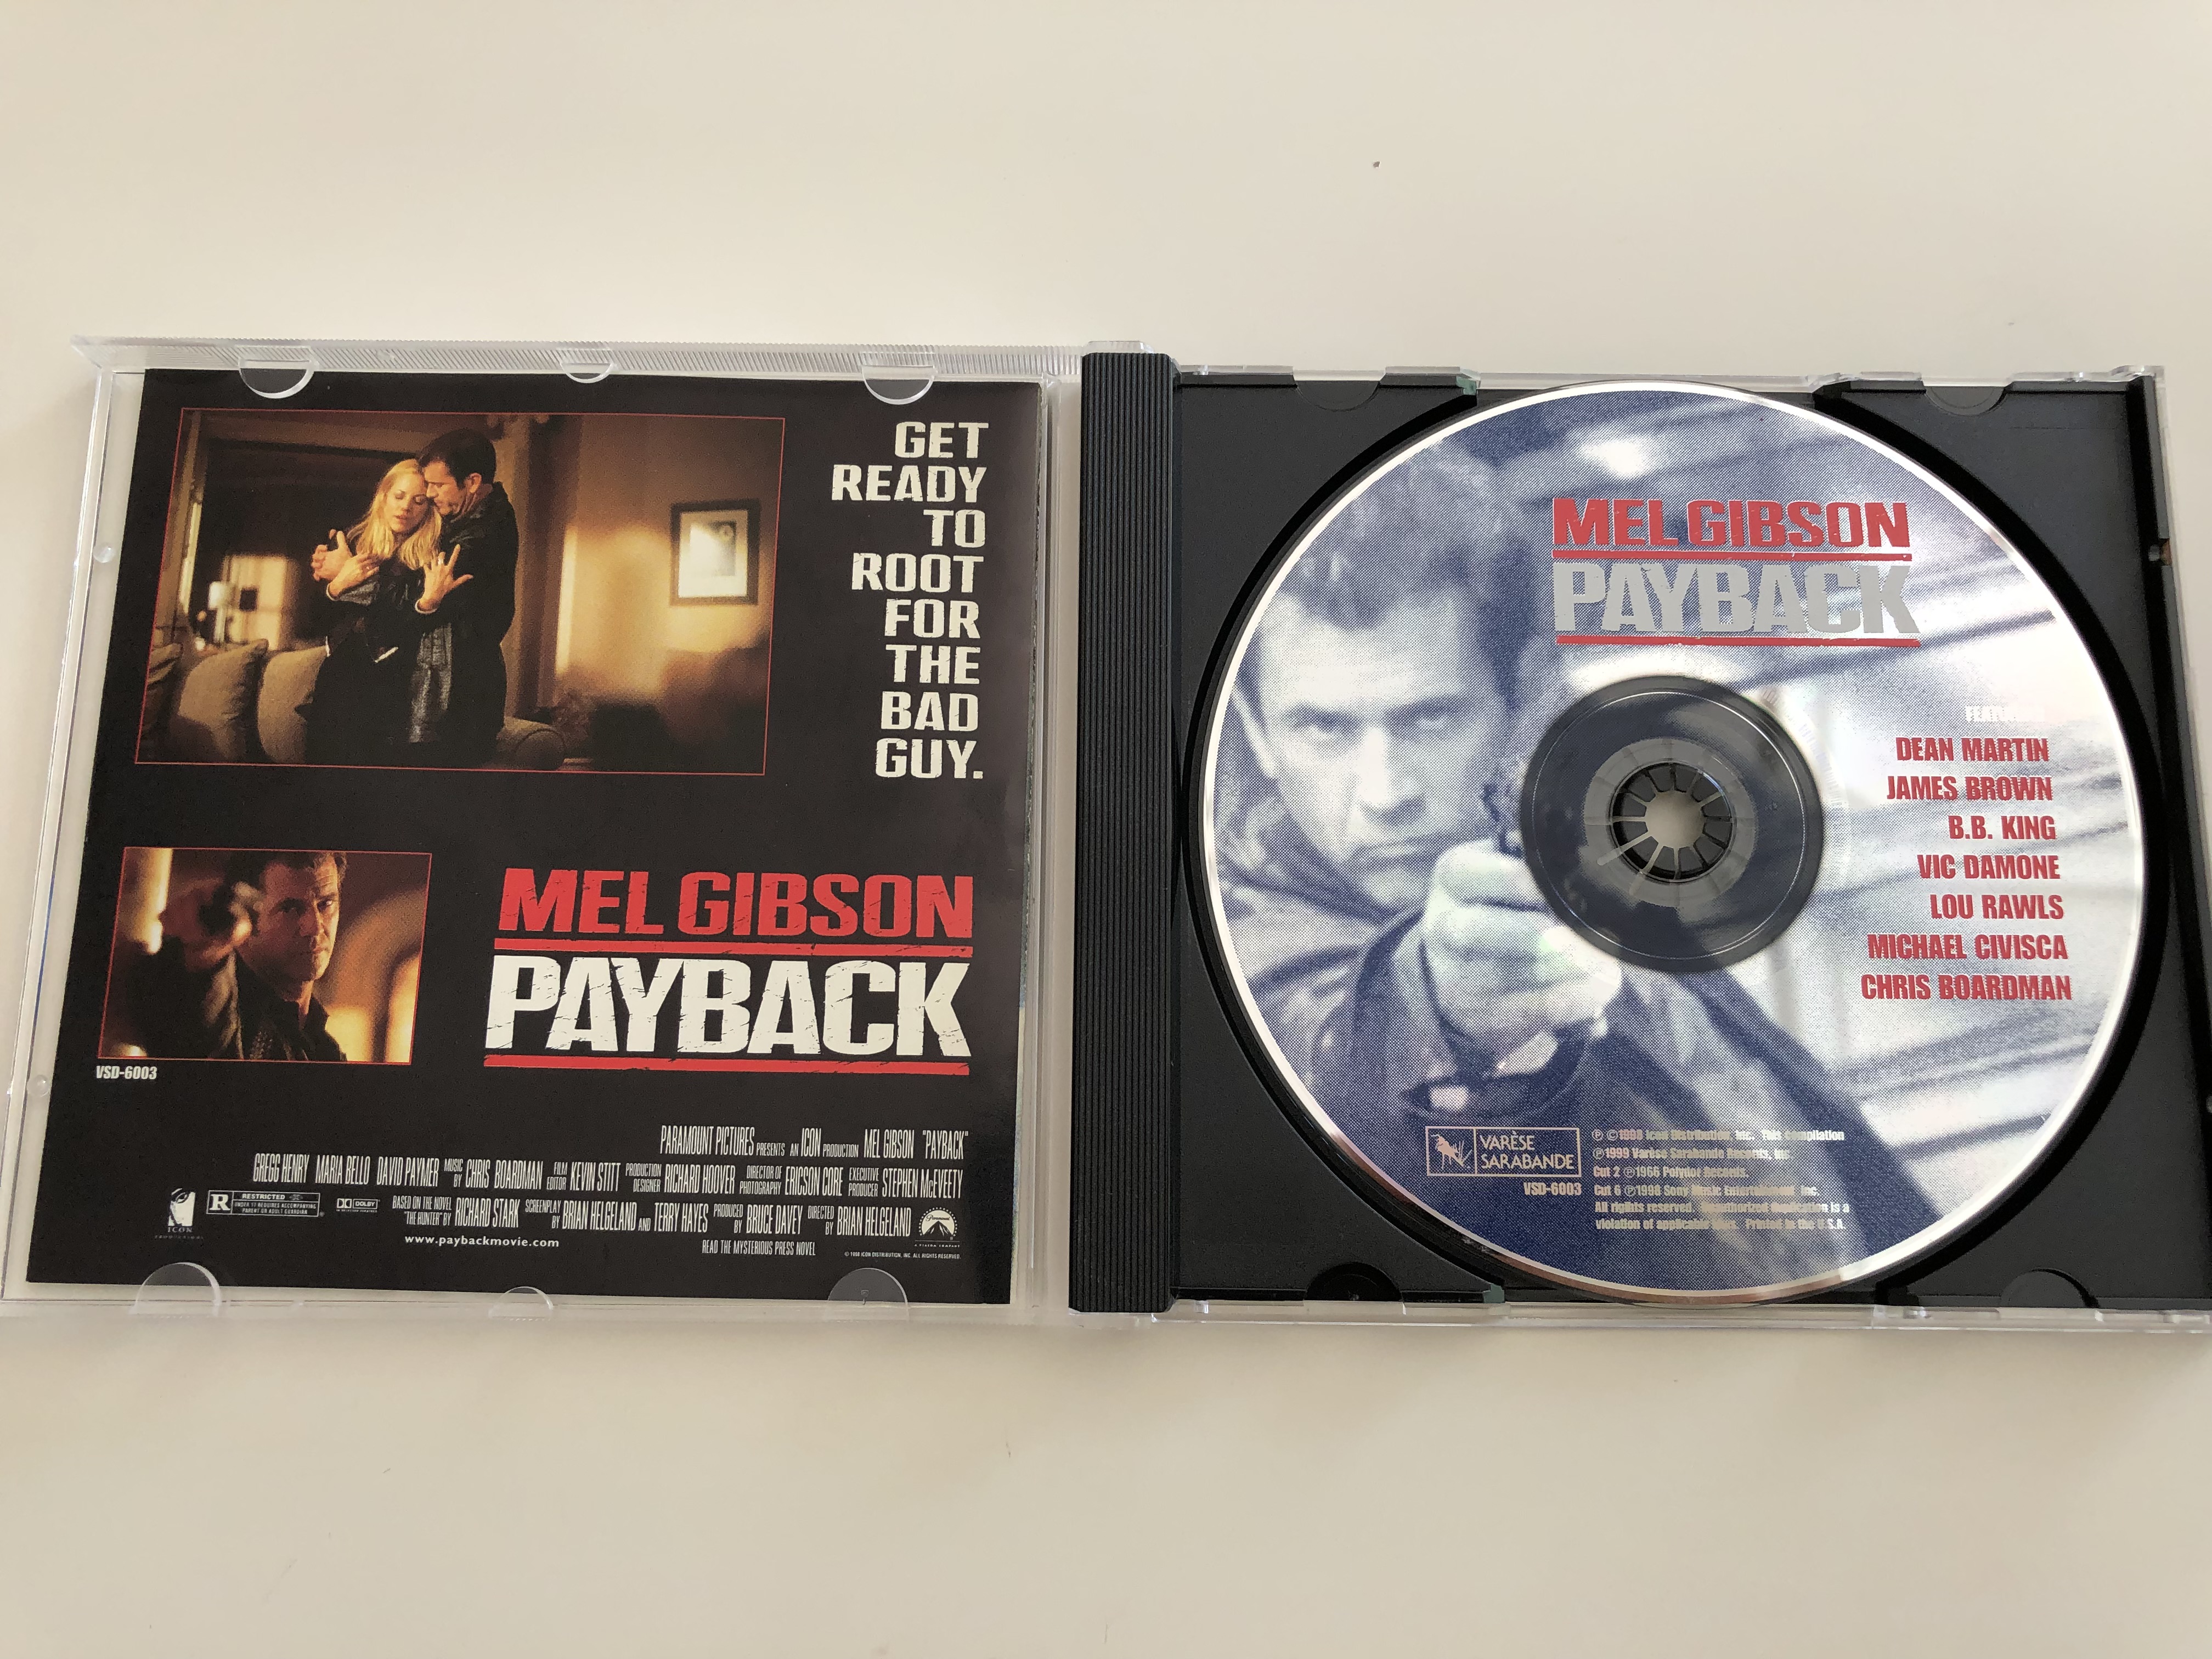 -mel-gibson-payback-original-motion-picture-soundtrack-ft.-dean-martin-james-brown-b.b.-king-vic-damone-audio-cd-1999-vsd-6003-2-.jpg